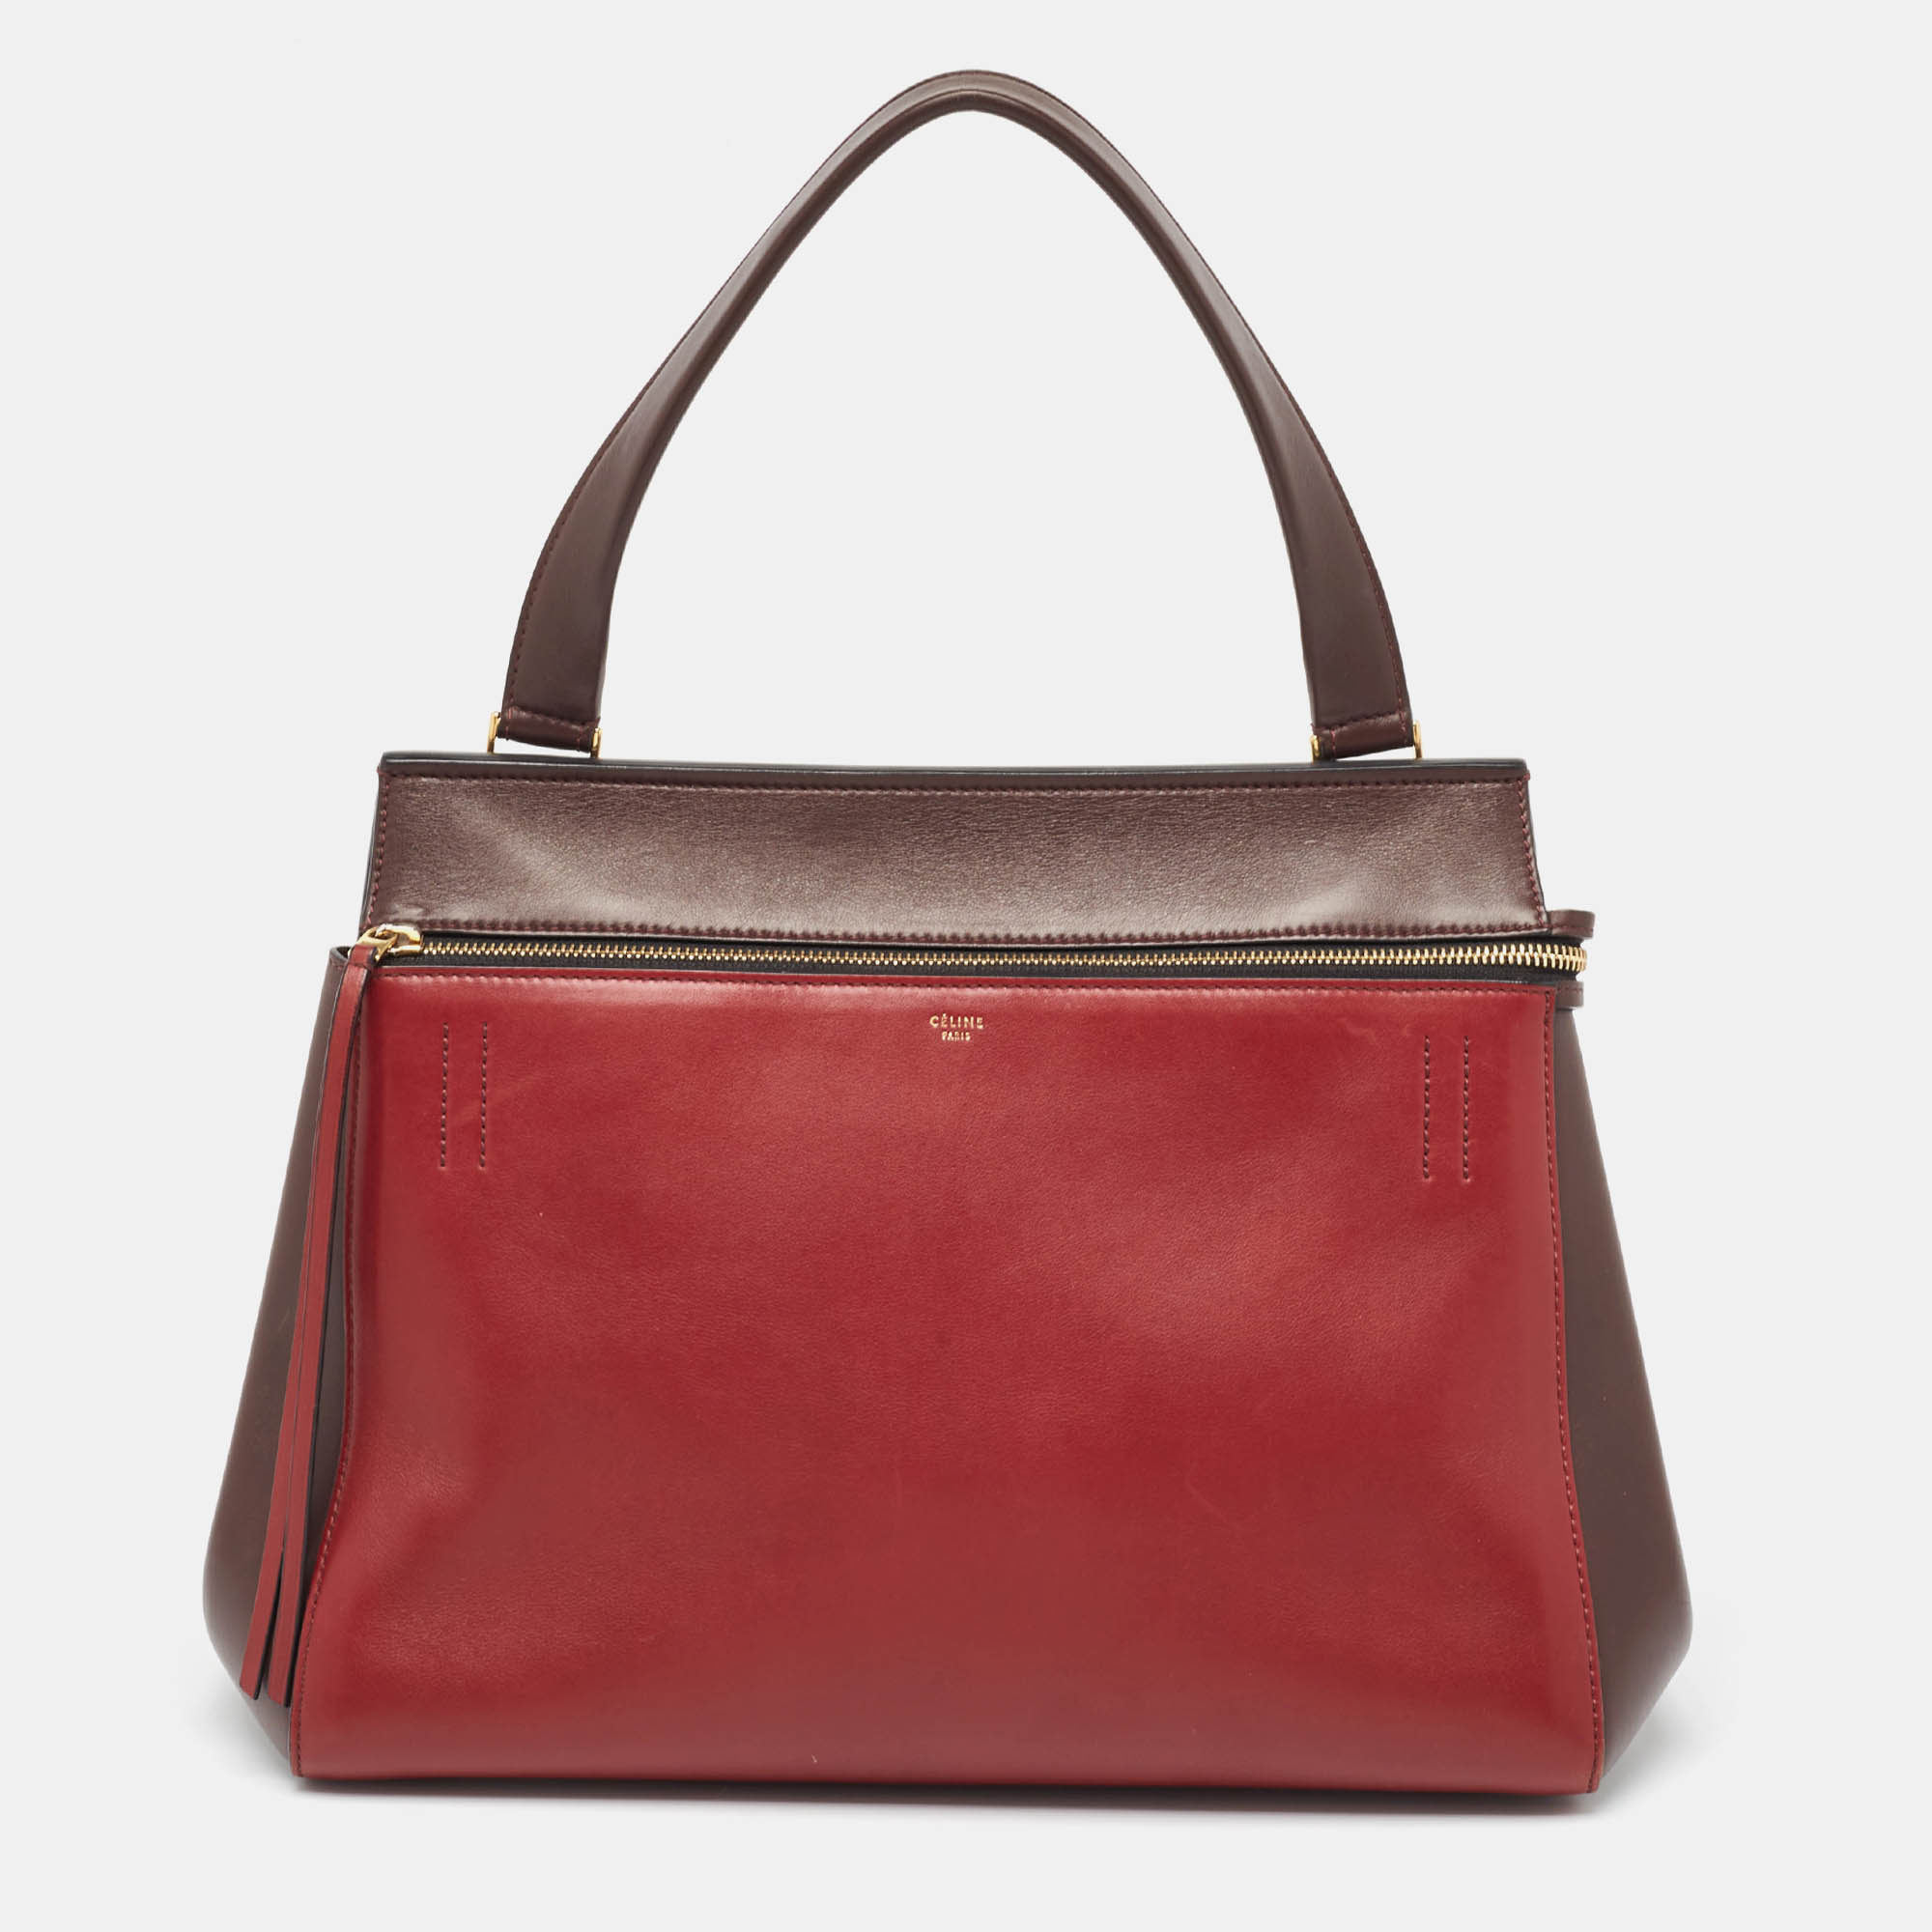 Celine burgundy/red leather medium edge top handle bag